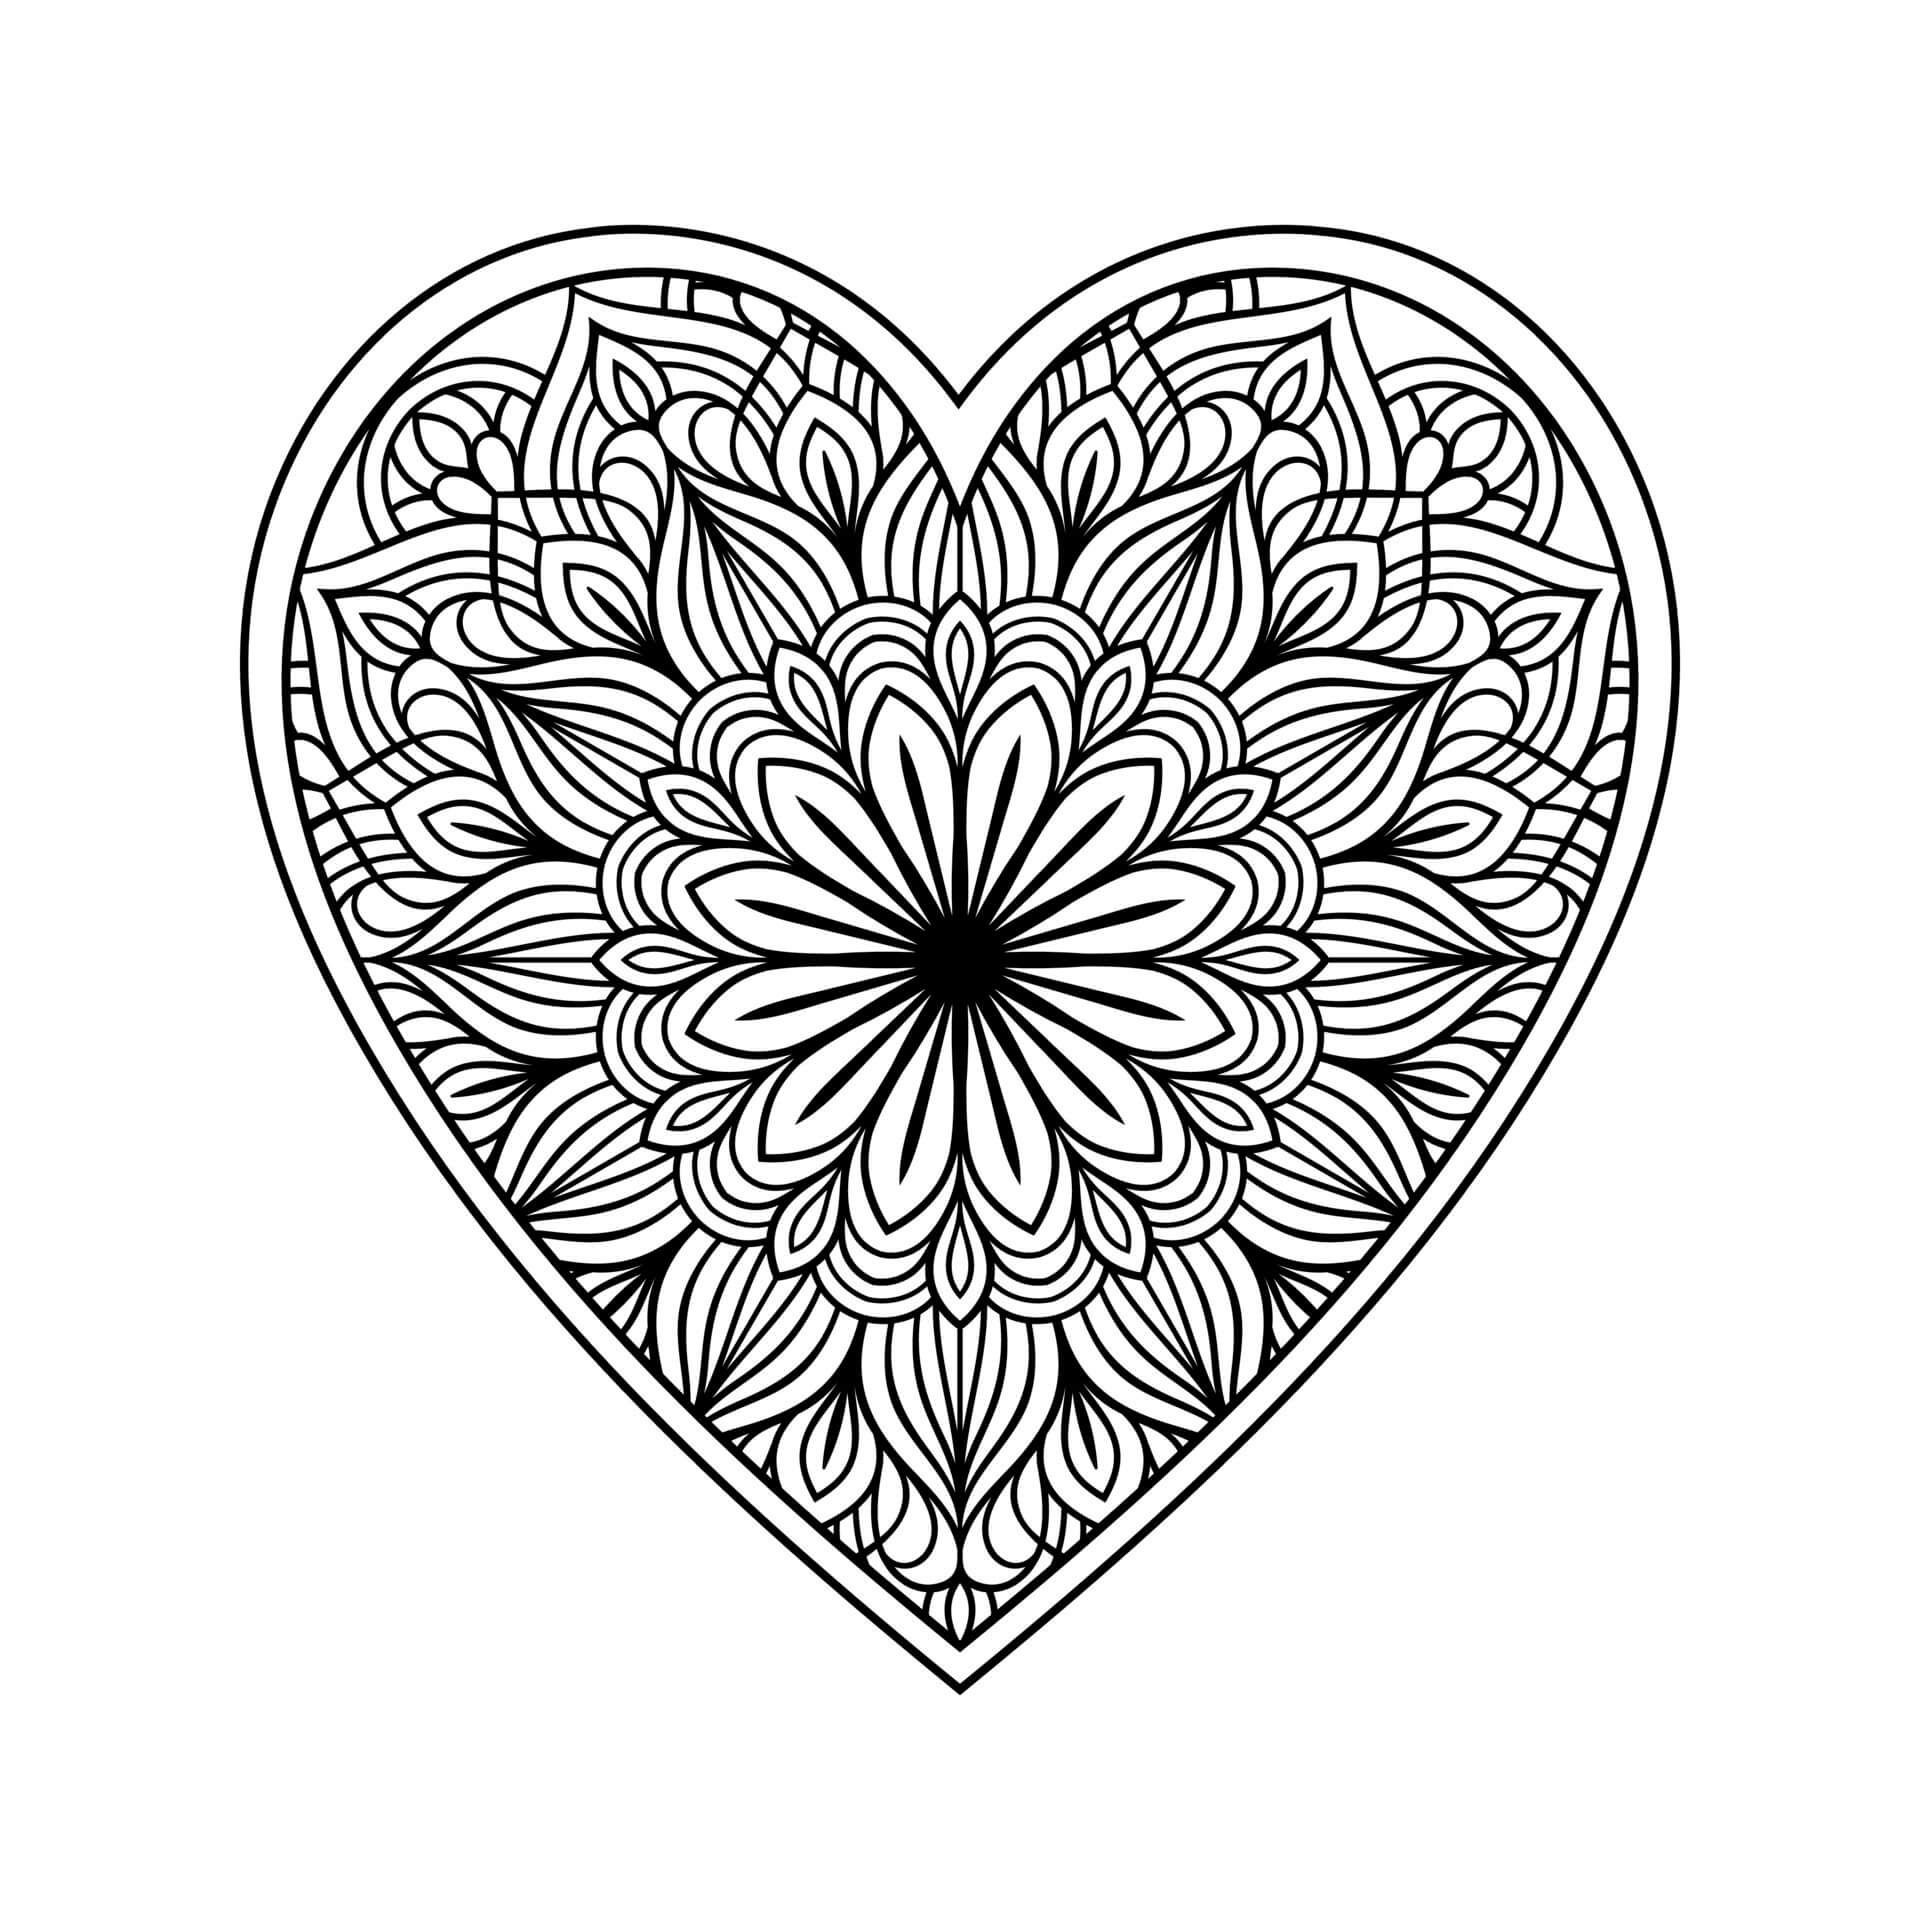 Mandala Heart Coloring Page – Sheet 4 Mandala